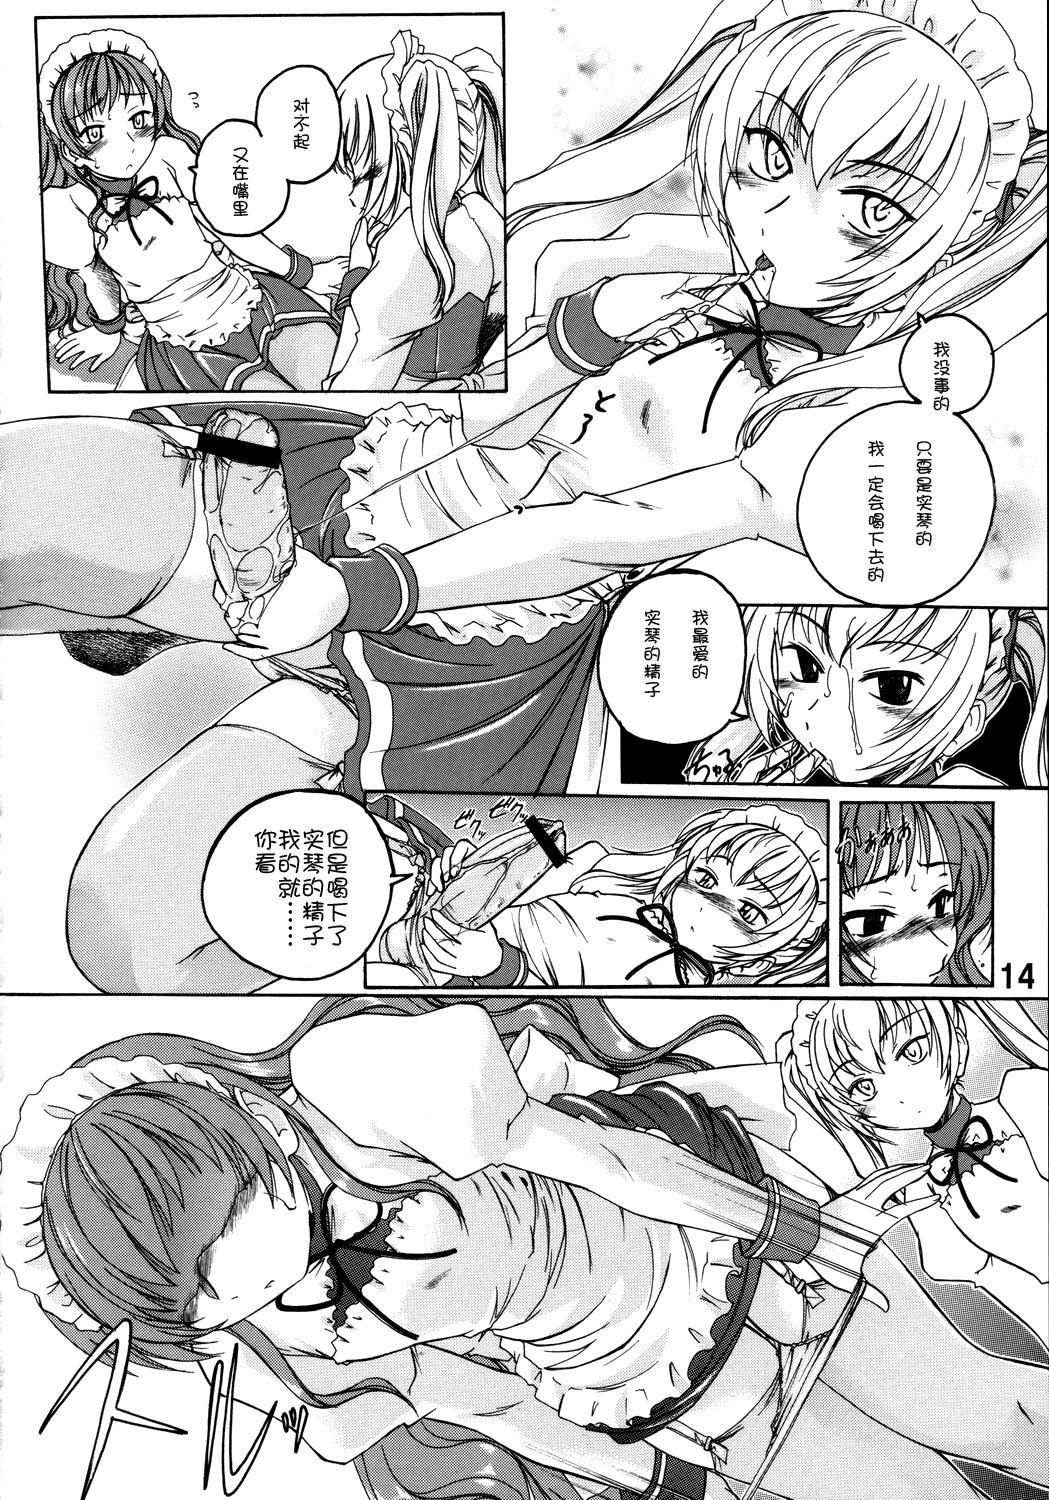 Mature Woman Manga Sangyou Haikibutsu 11 - Comic Industrial Wastes 11 - Princess princess Africa - Page 13